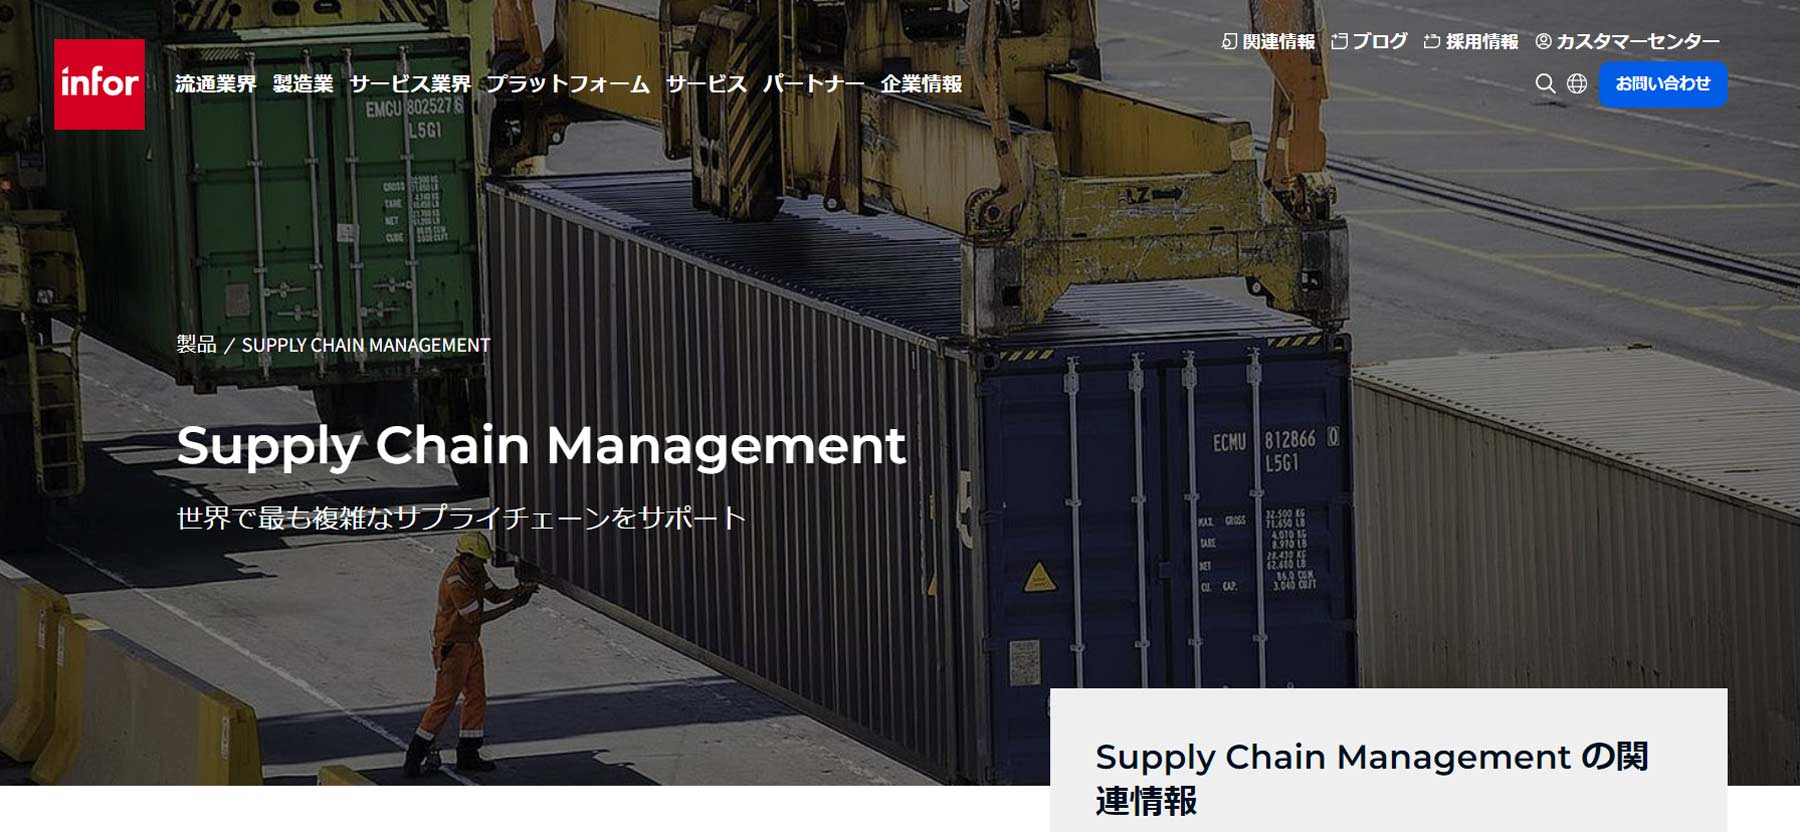 Infor Supply Chain Management公式Webサイト